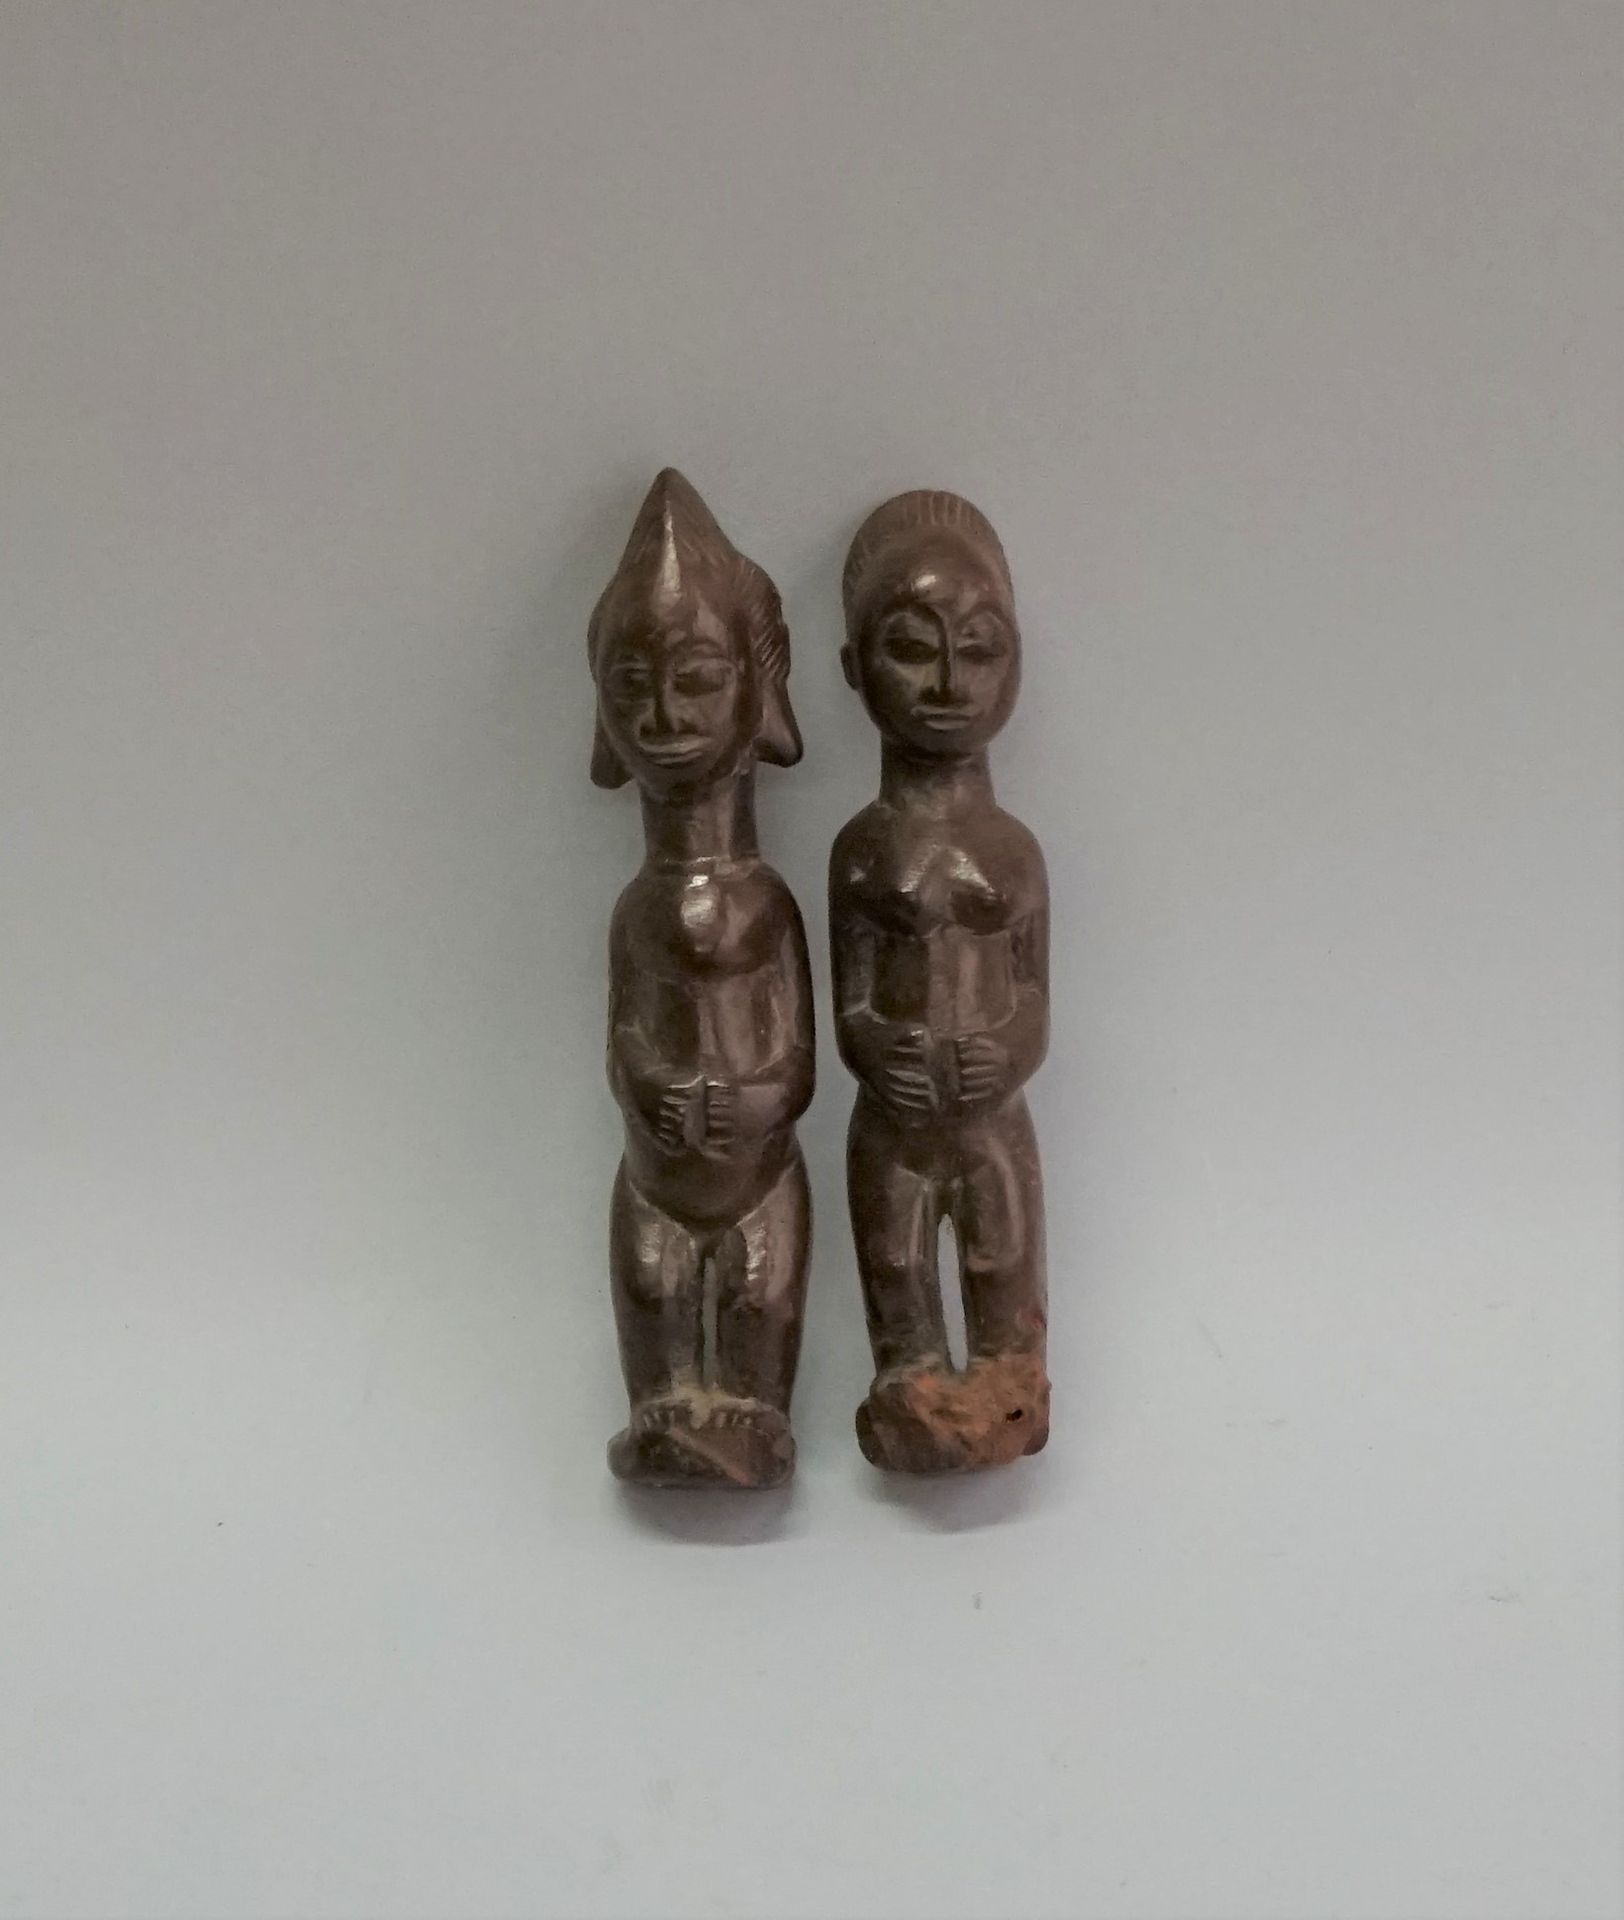 Null 两件木制的生殖器，有淡淡的铜锈。妇女将手放在肚子上，以示象征性的姿态。 班巴拉，马里。

高：13和13.5厘米